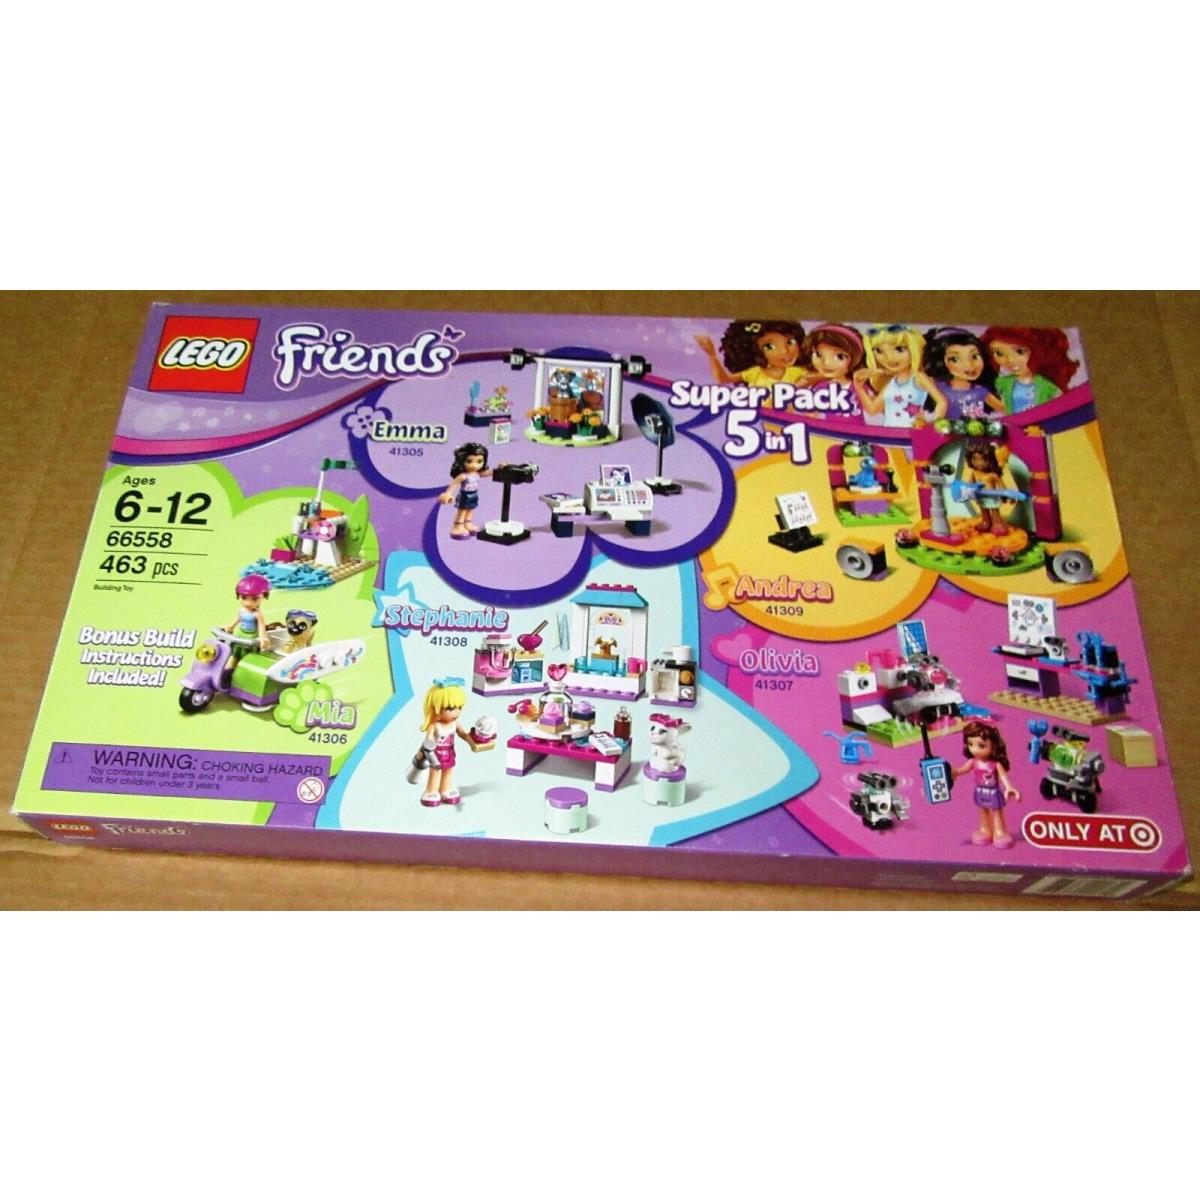 Lego Friends 66558 Super Pack 5 IN 1 Target Exclusive Olivia Stephanie Nisb